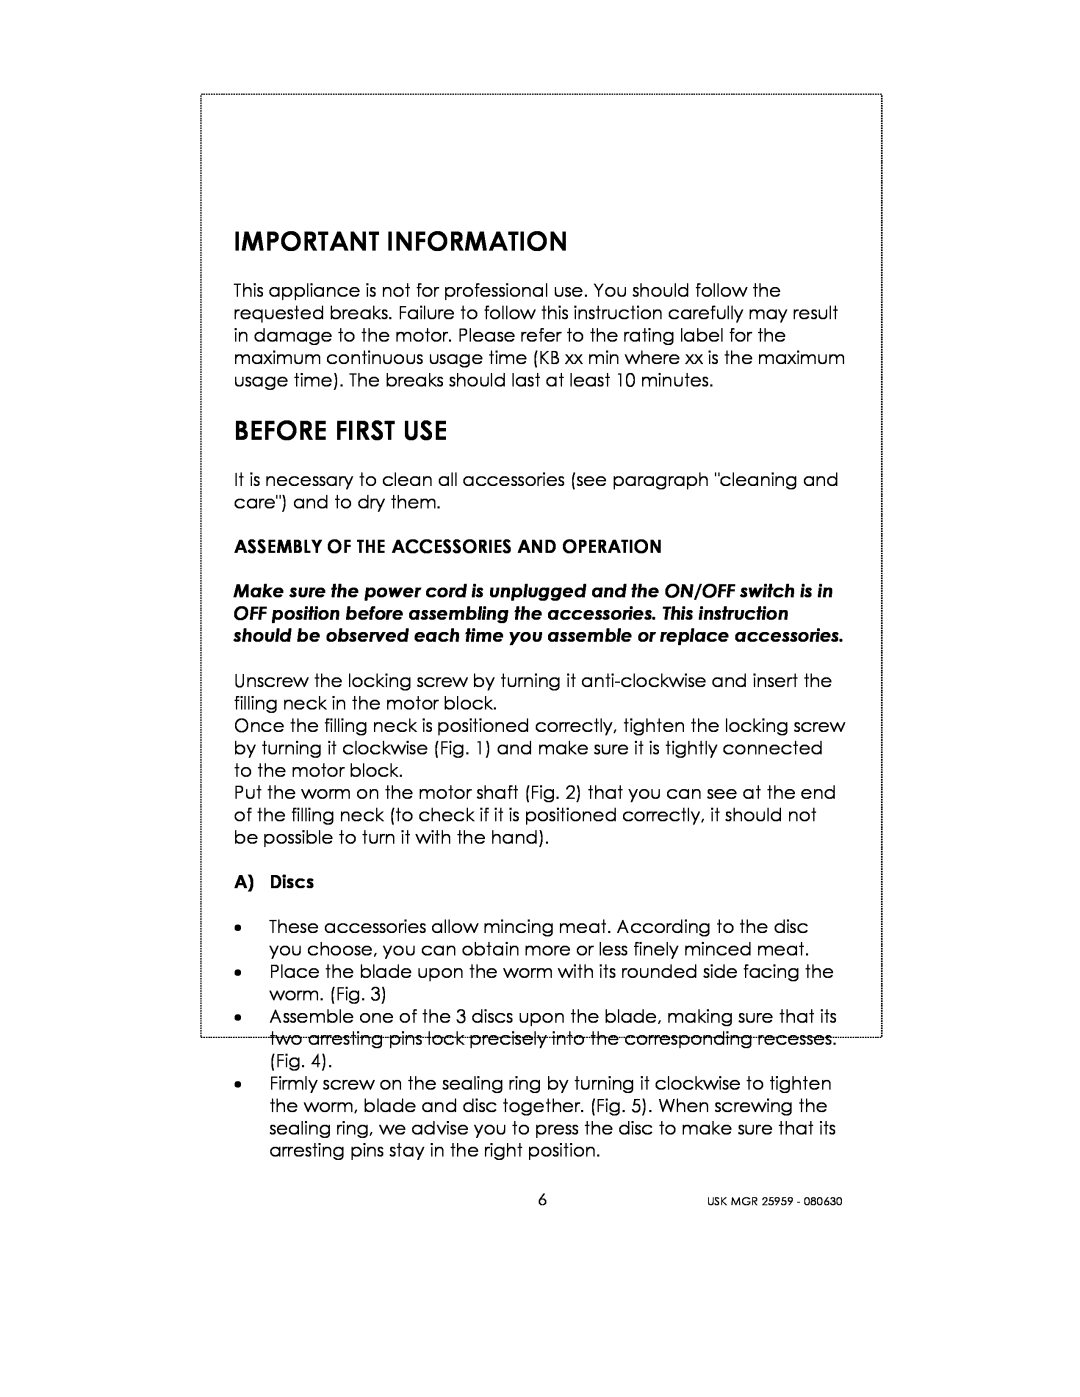 Kalorik USK MGR 25959 manual Important Information, Before First Use 